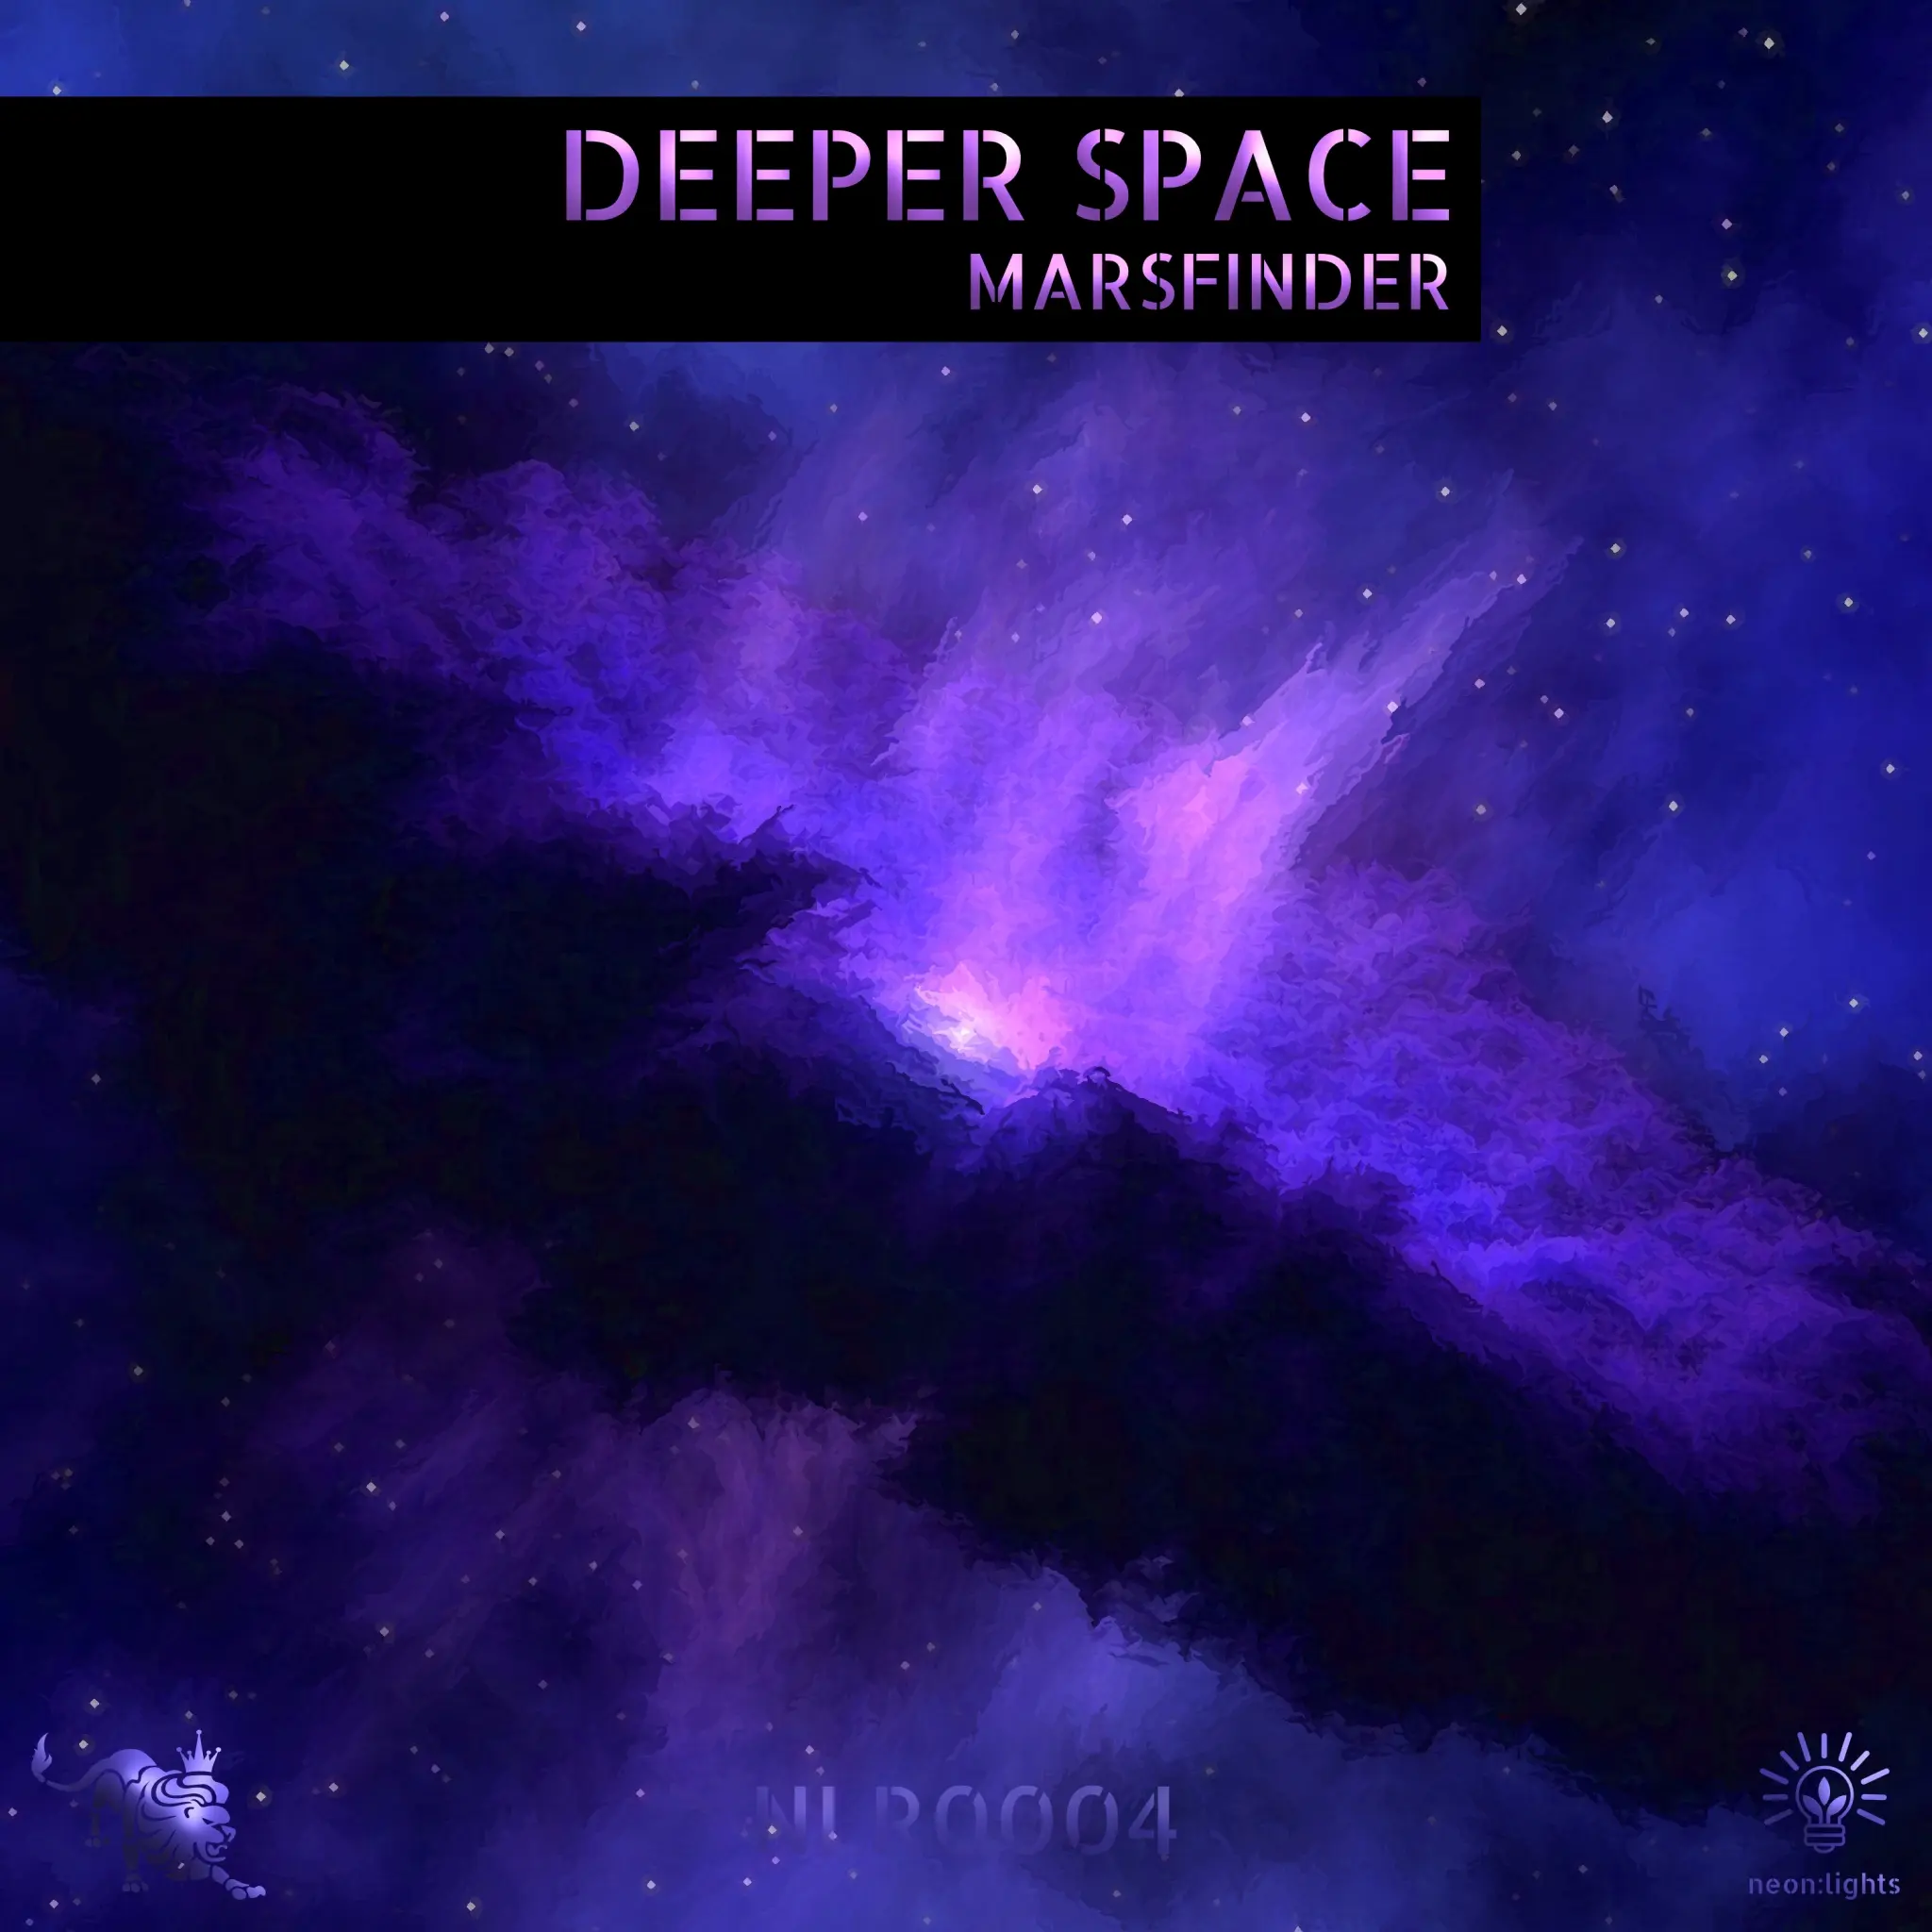 Marsfinder - Deeper Space